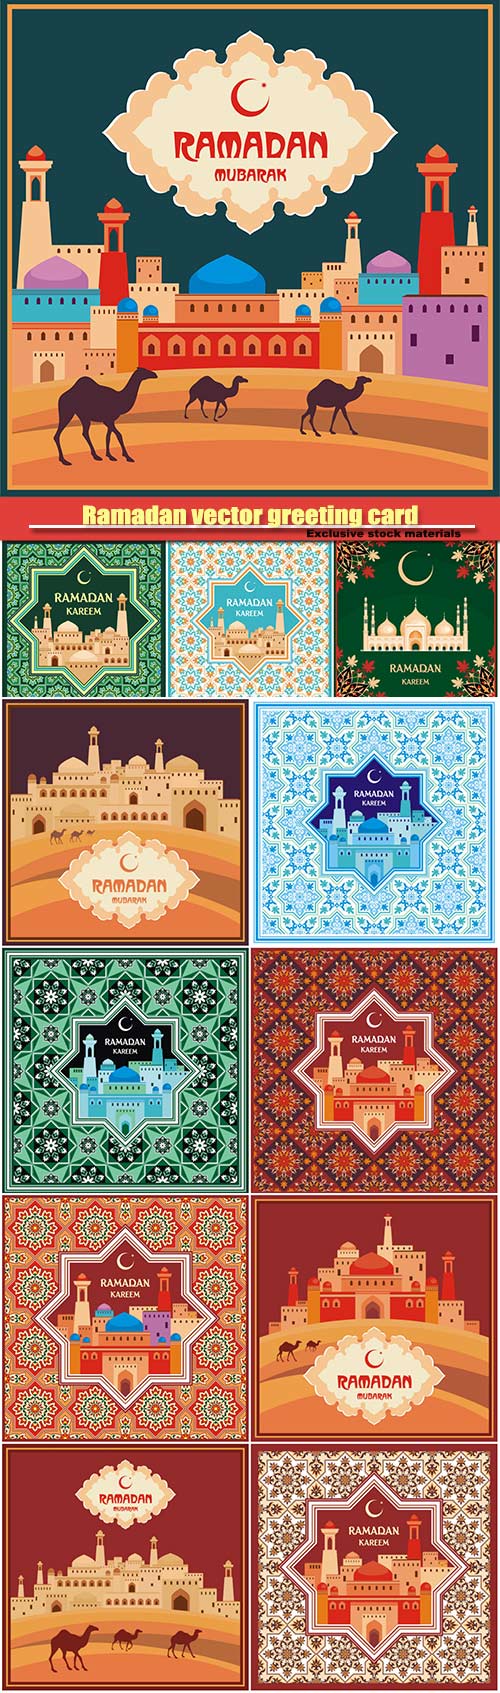 Ramadan vector greeting card